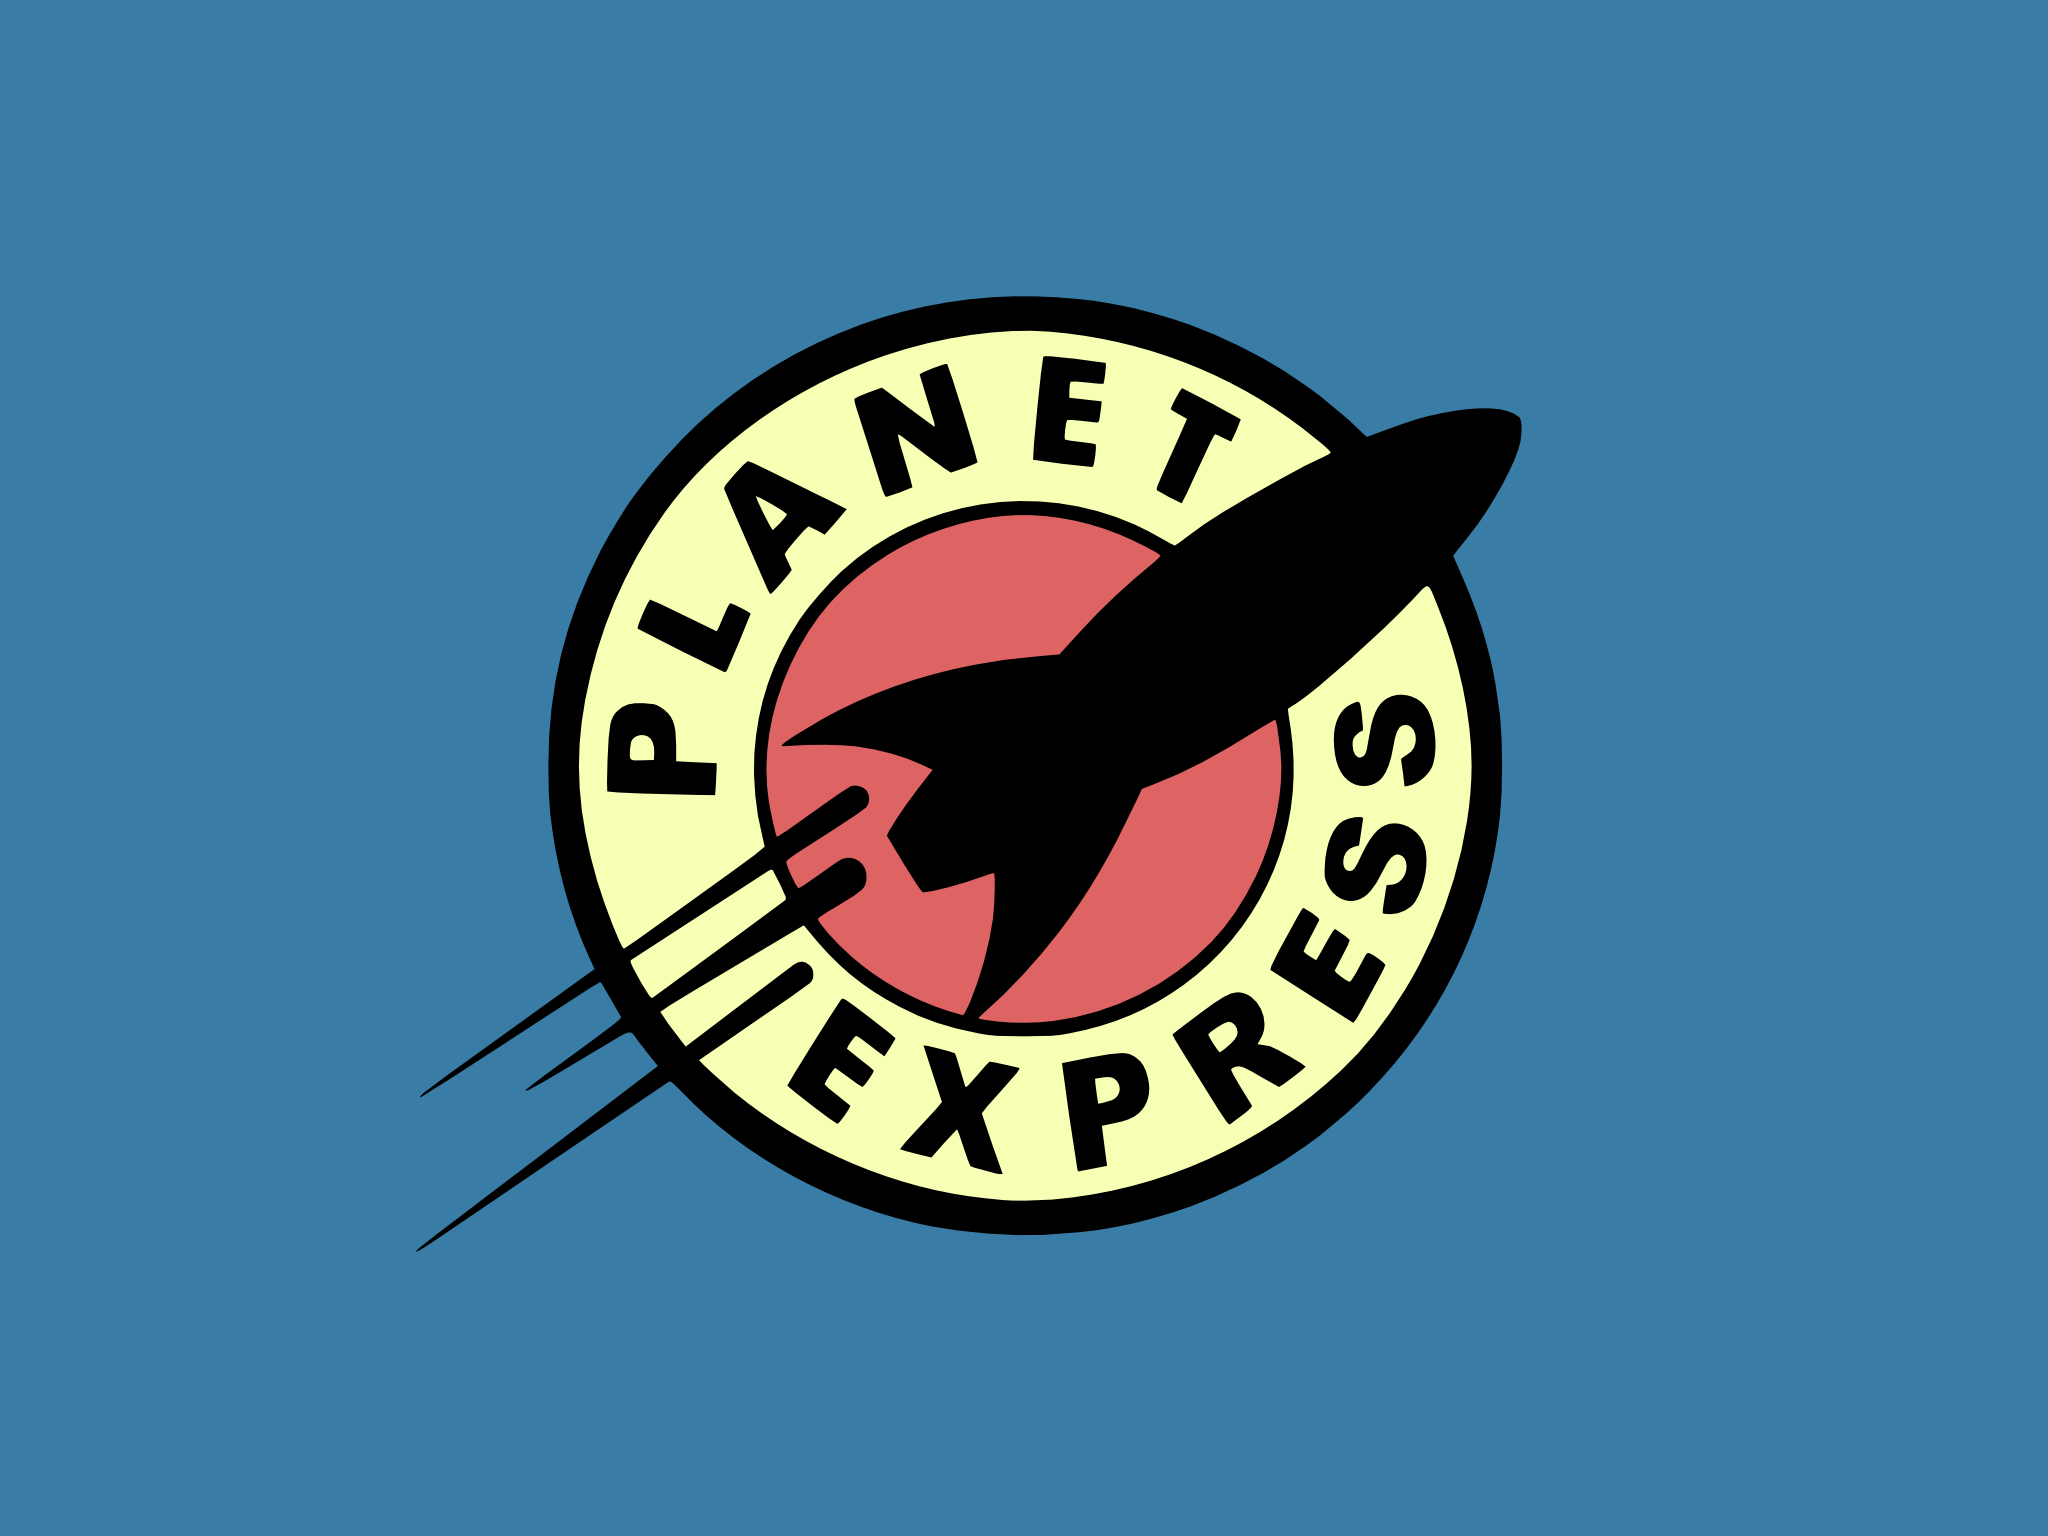 Cartoon Spaceship Planet Express 2048x1536